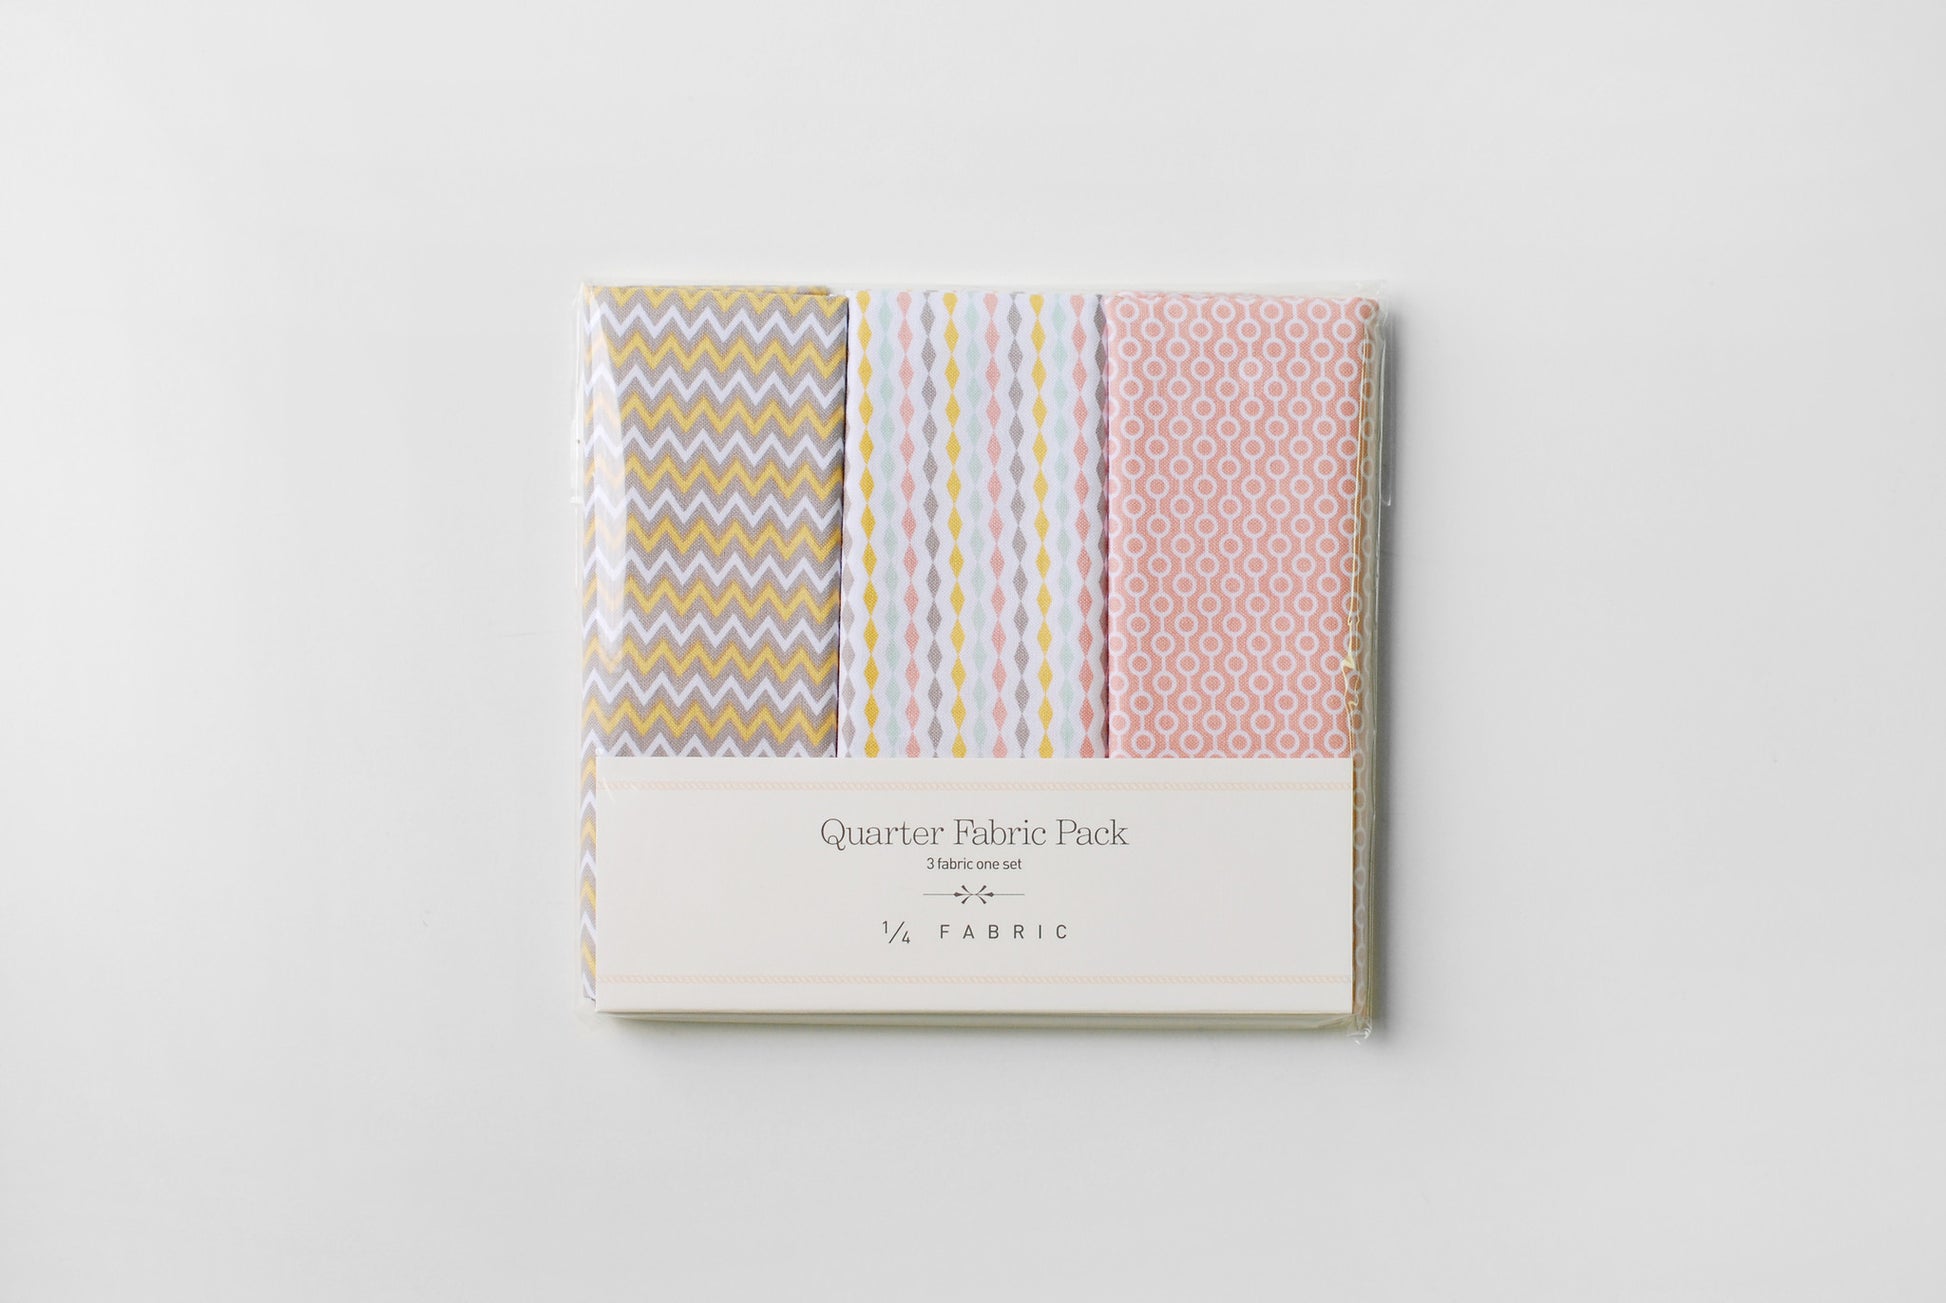 Quarter Fabric Pack - Cotton, Dailylike "Street" - KEY Handmade
 - 5